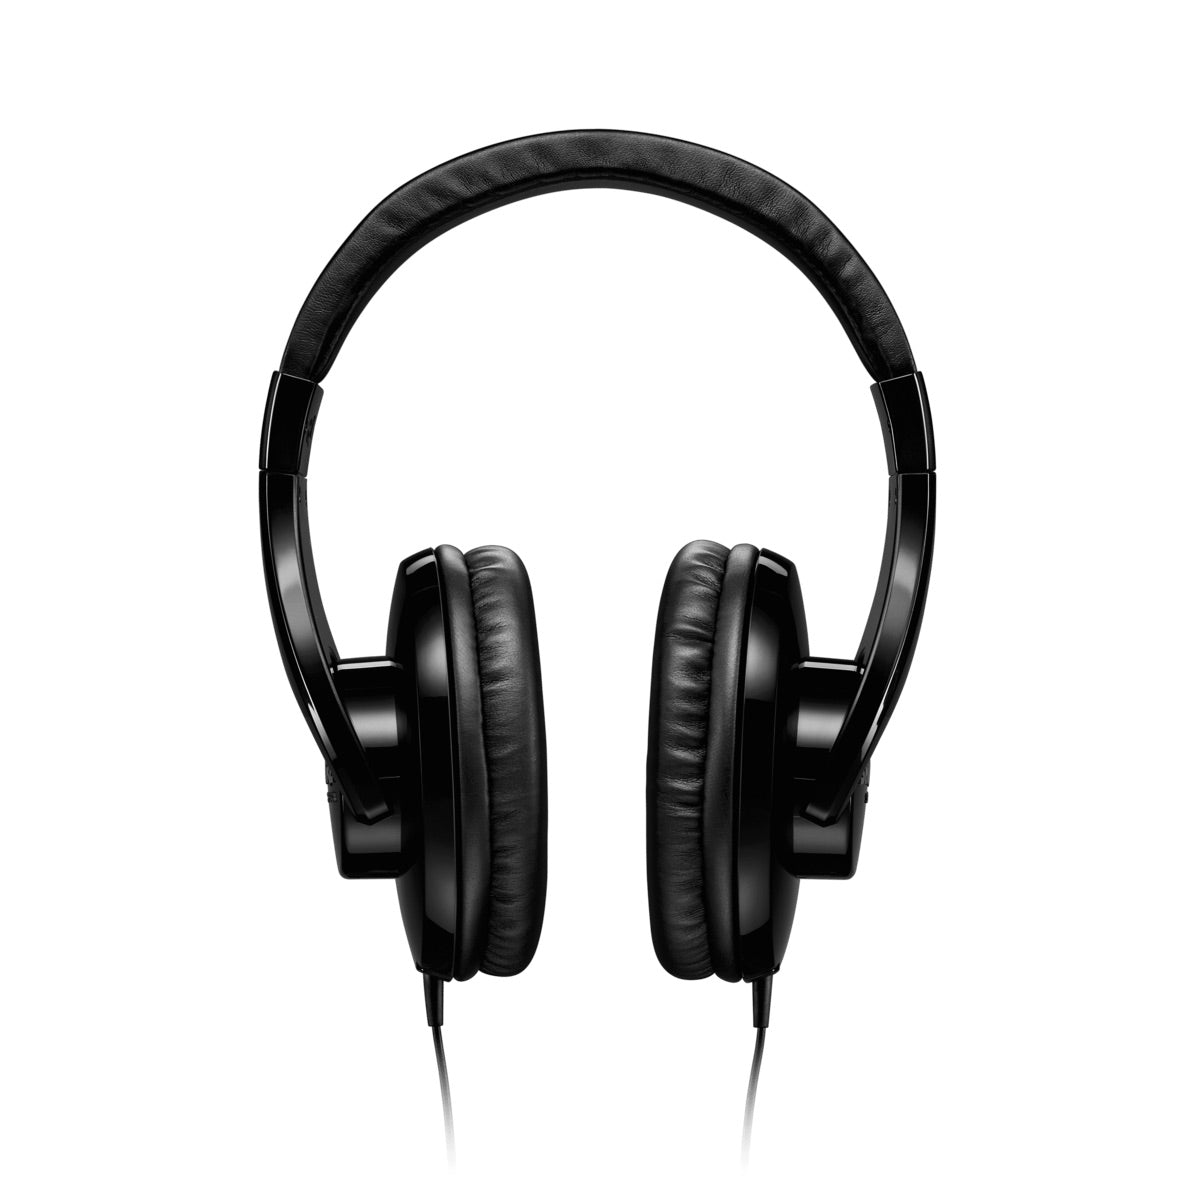 Shure SRH240A - Professional Quality Headphones